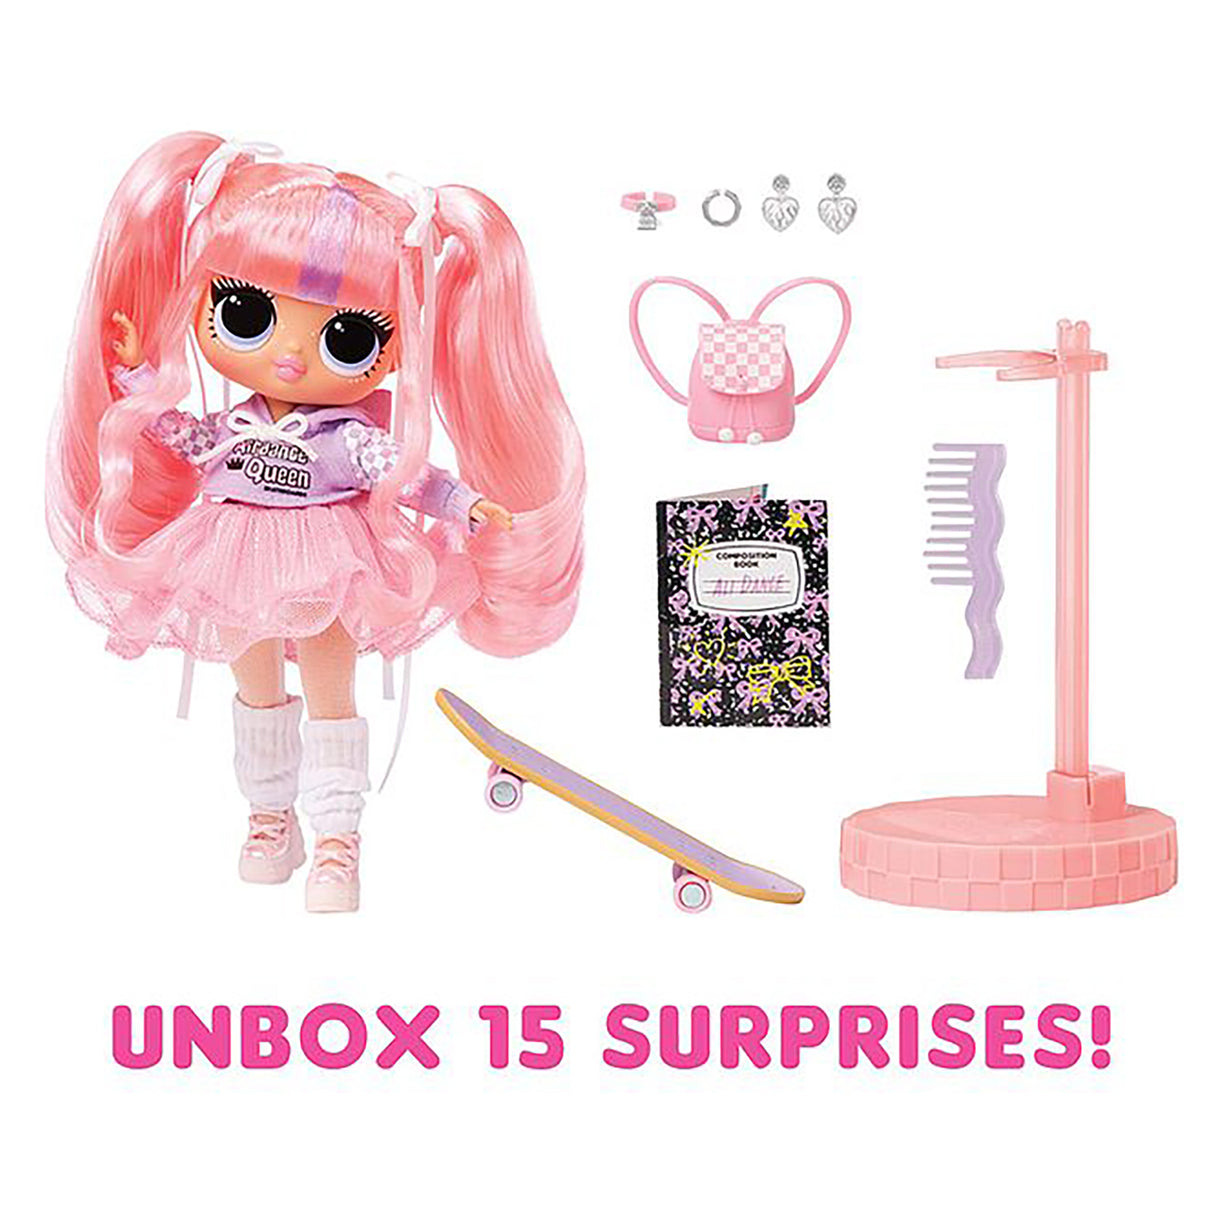 Lol surprise Tweens+Tots Baby Sitters Ivy Winks+Baby Doll Pink